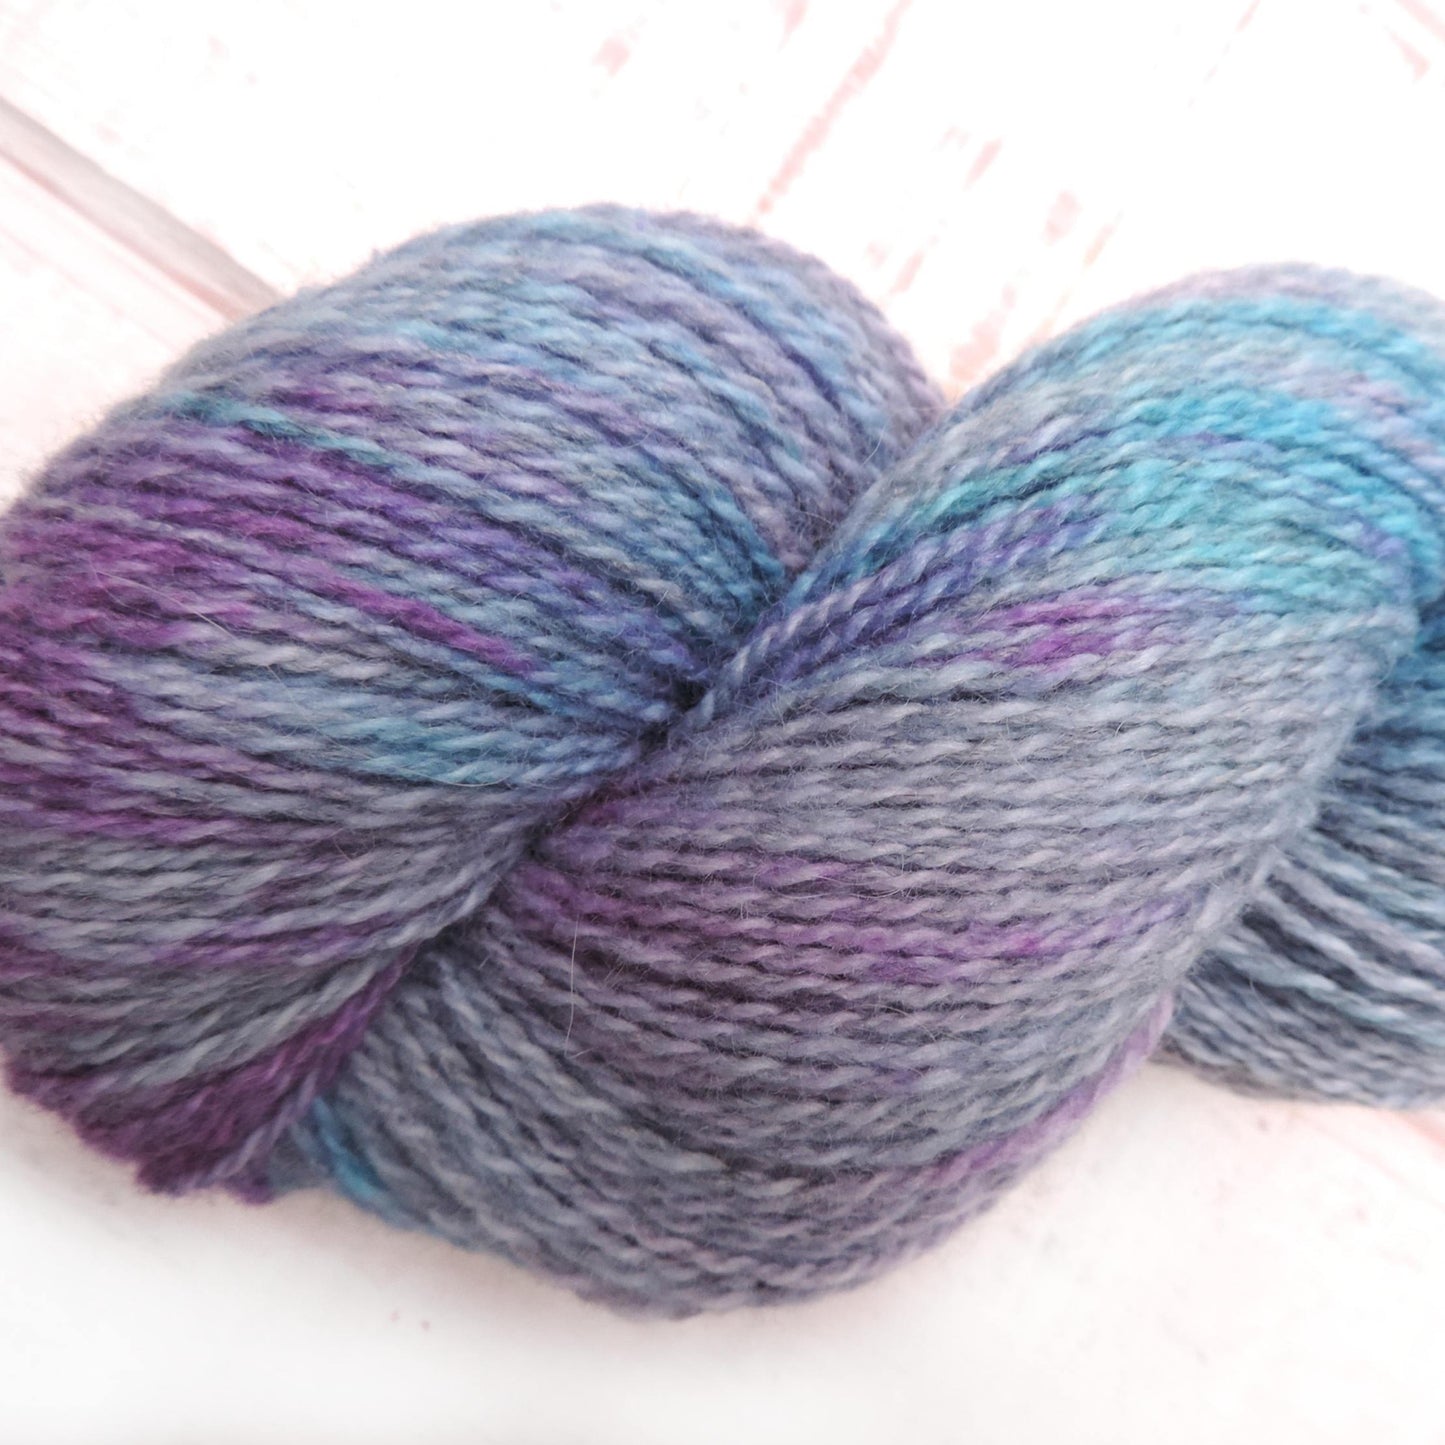 Cosmic Dust - Trollfjord Sock - Variegated Yarn - Hand dyed yarn